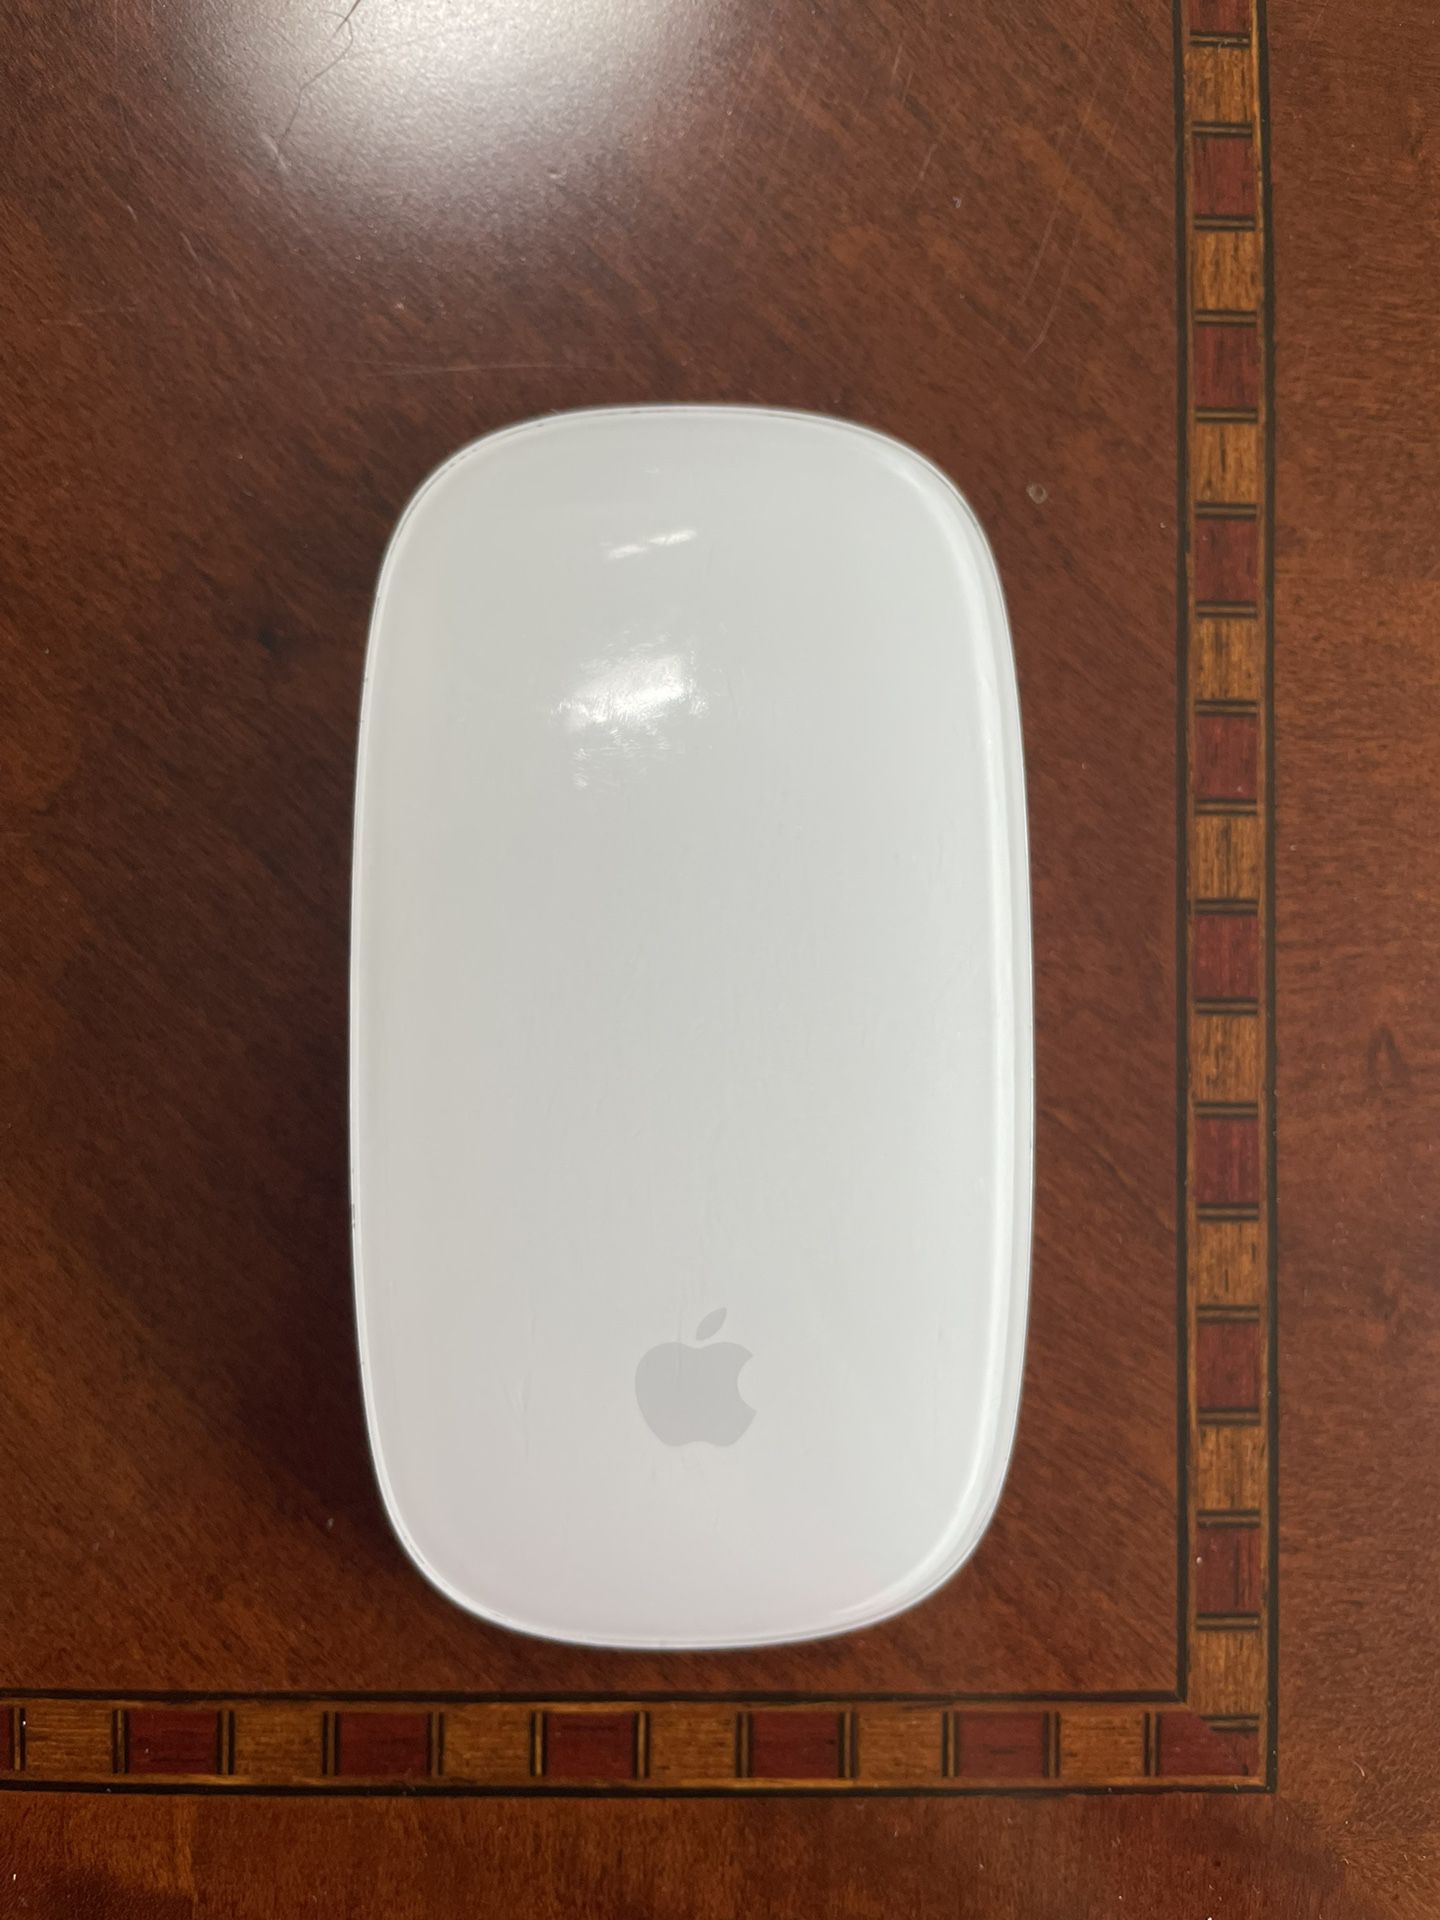 Apple Magic Mouse (white)